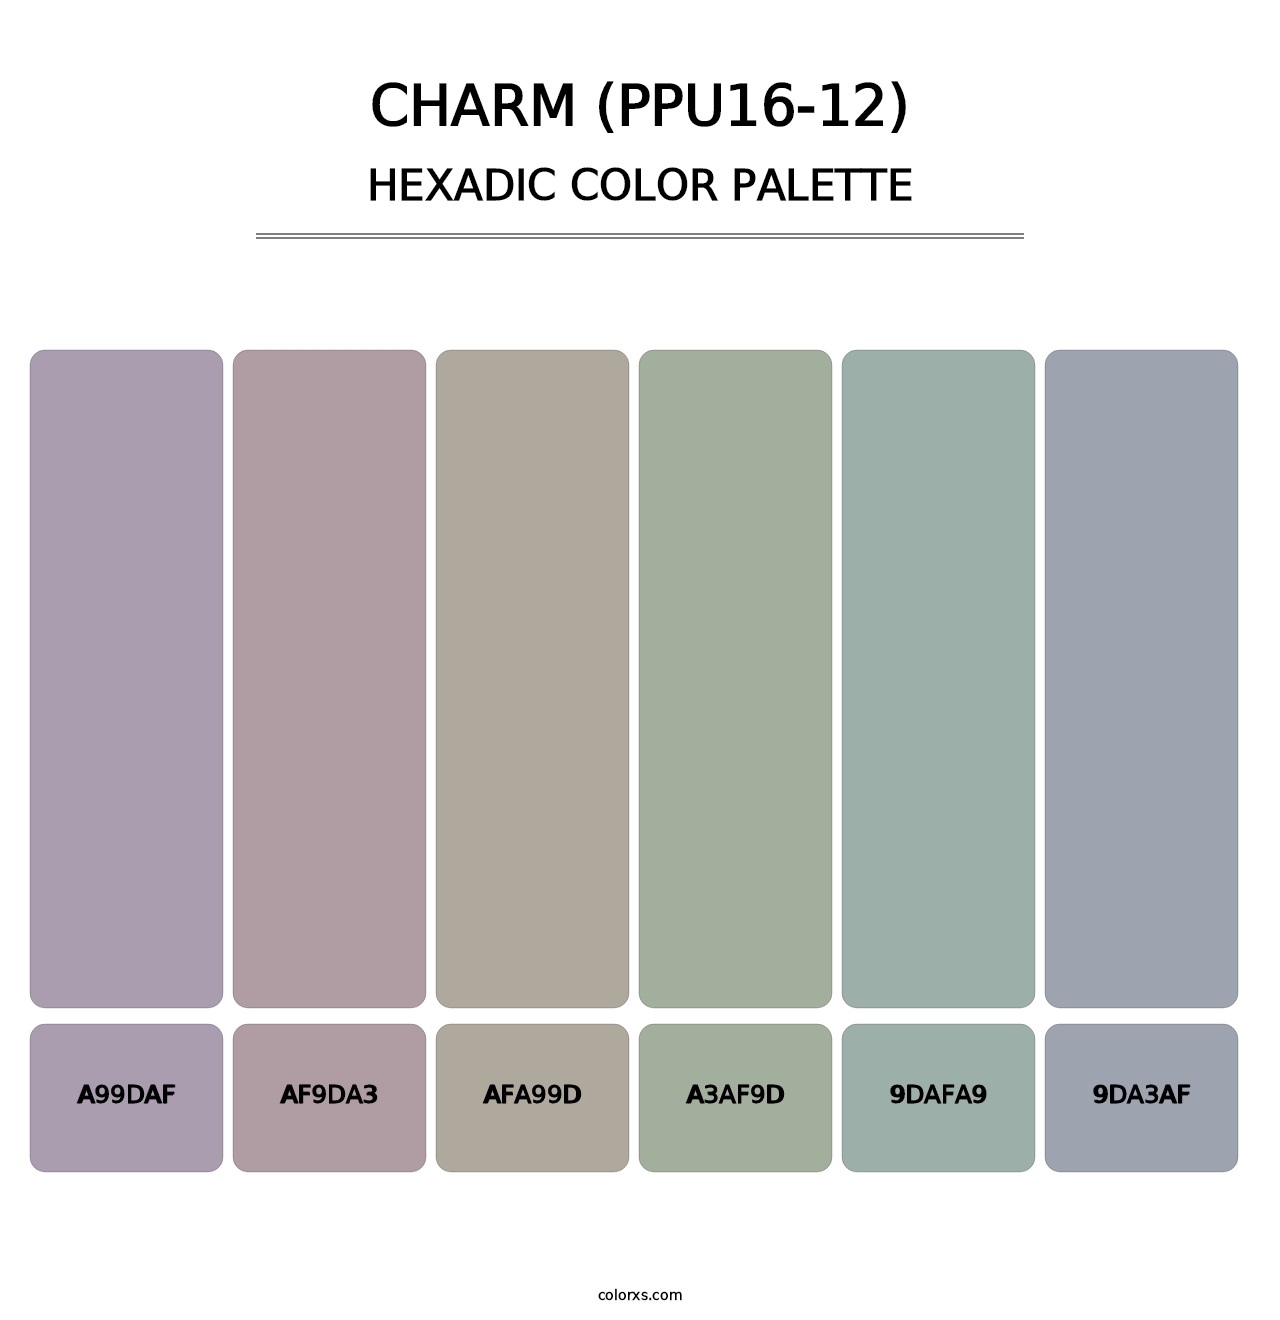 Charm (PPU16-12) - Hexadic Color Palette